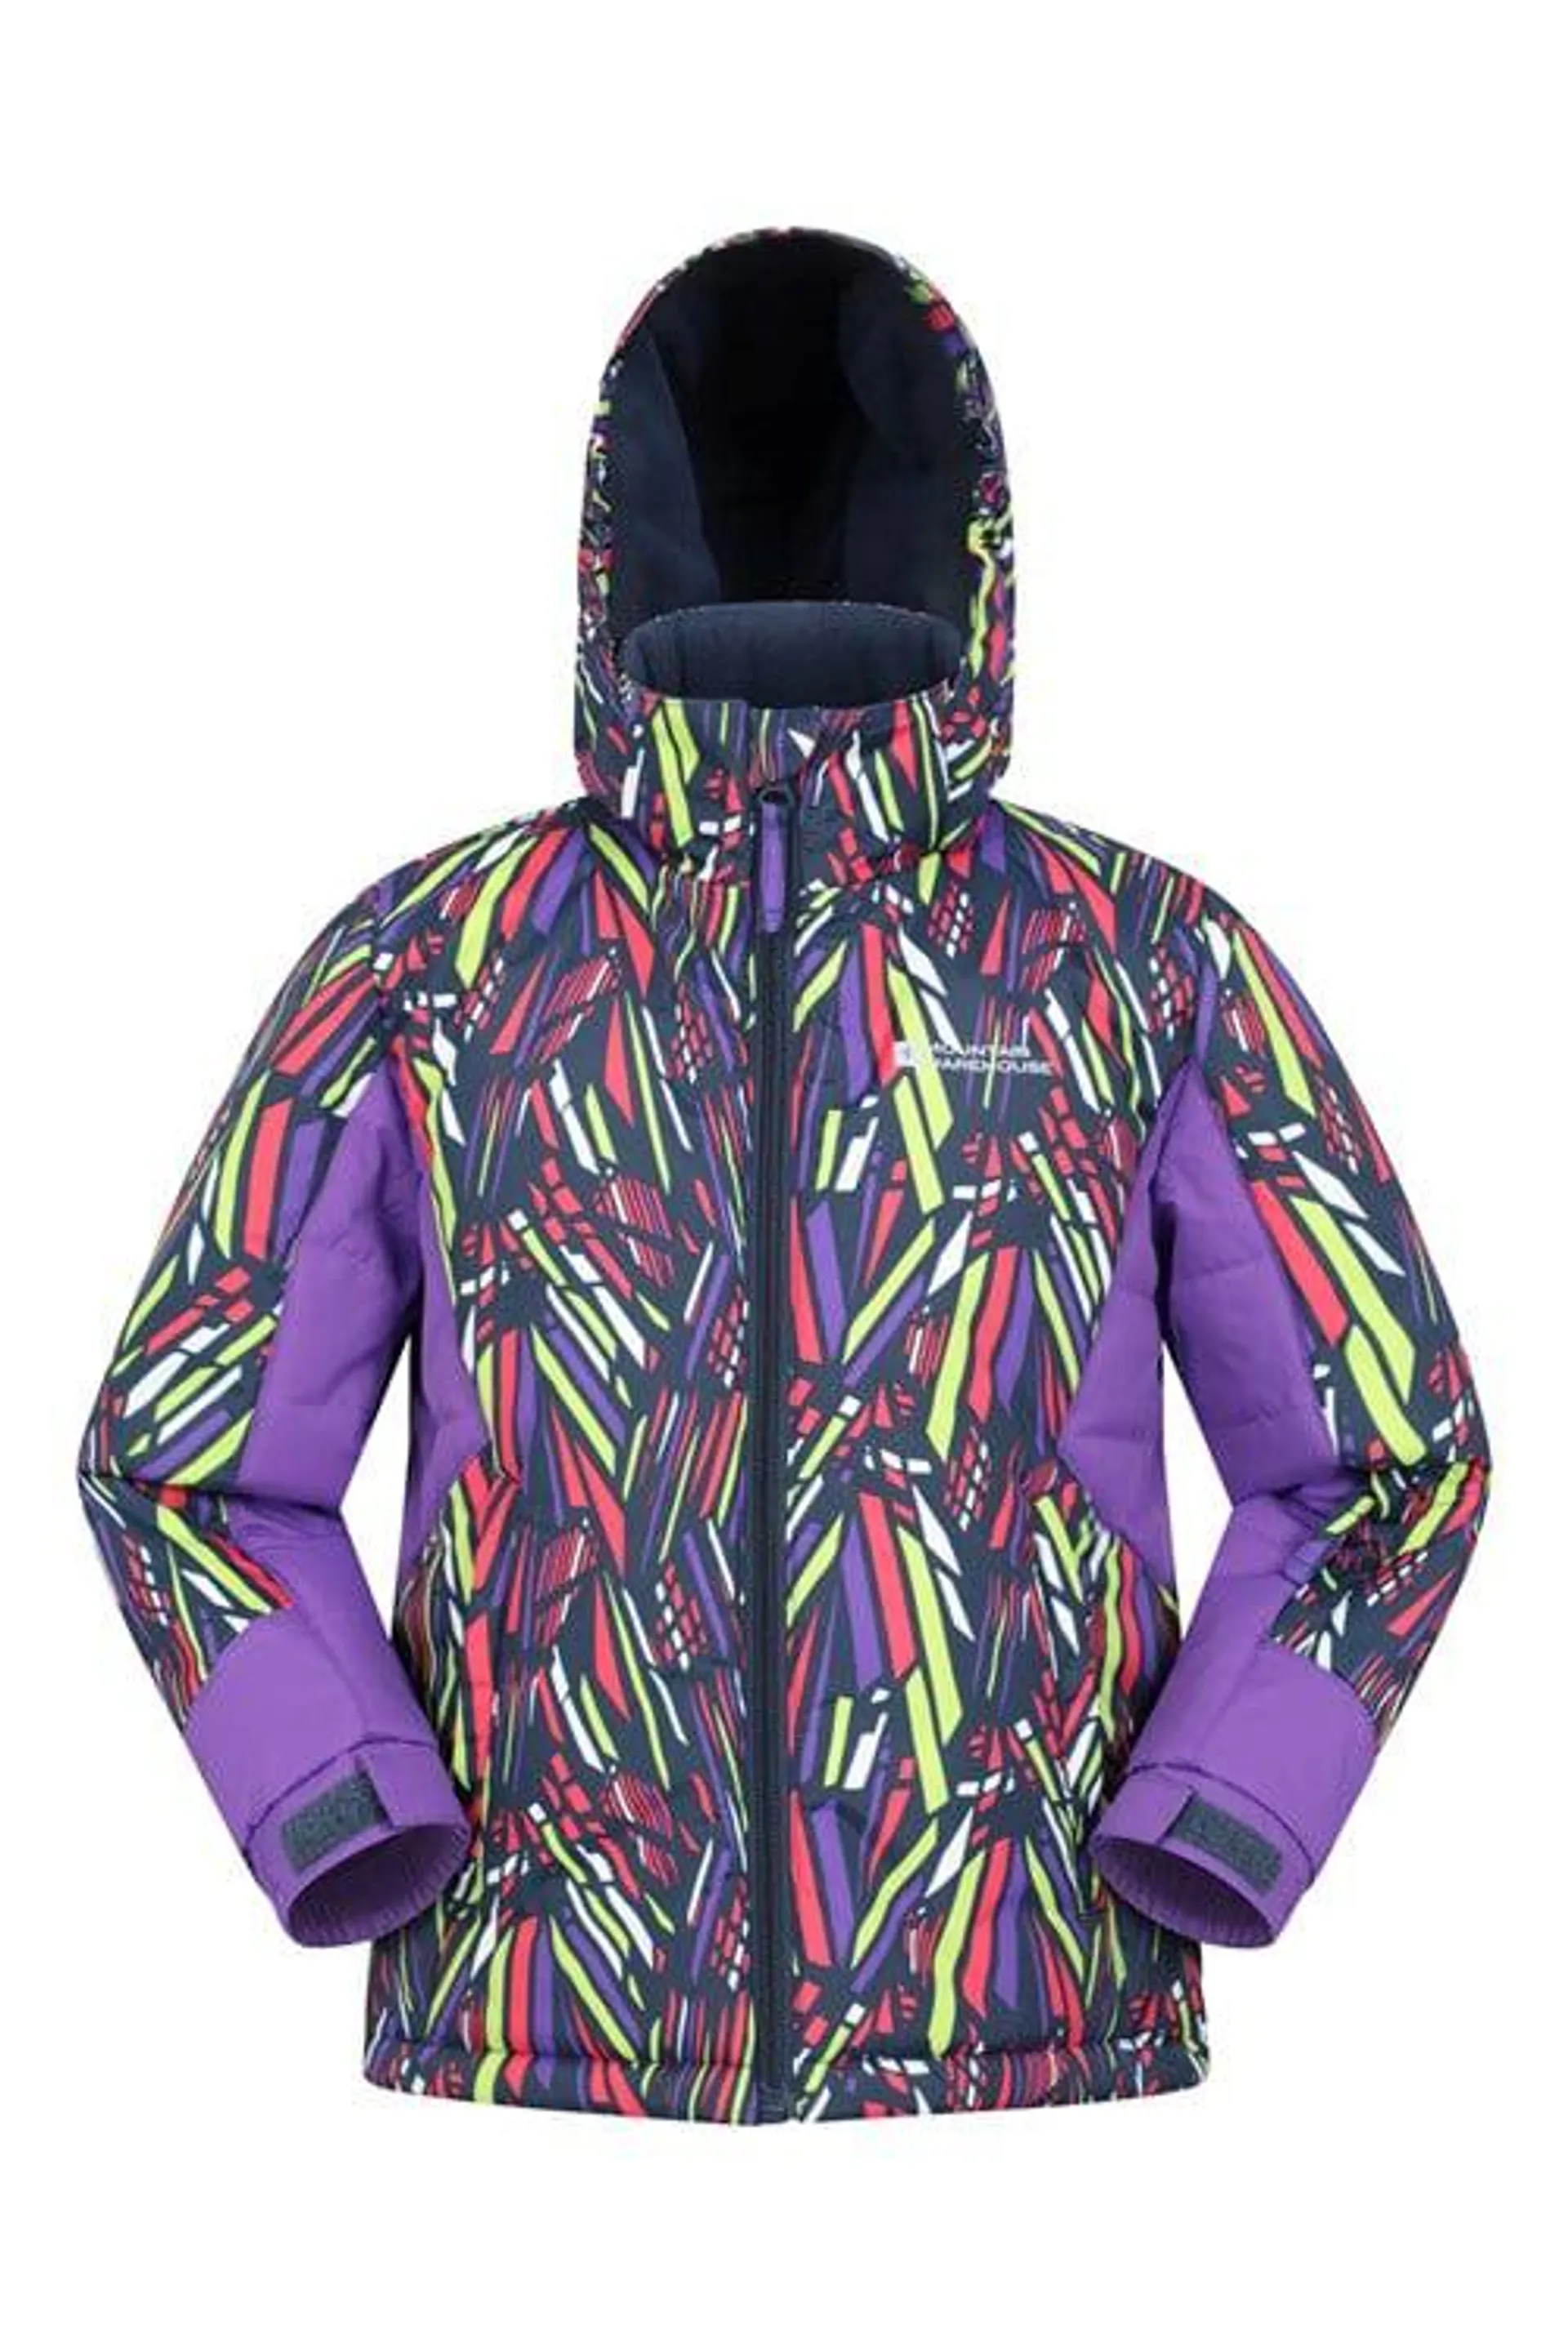 Vortex Kids Printed Ski Jacket